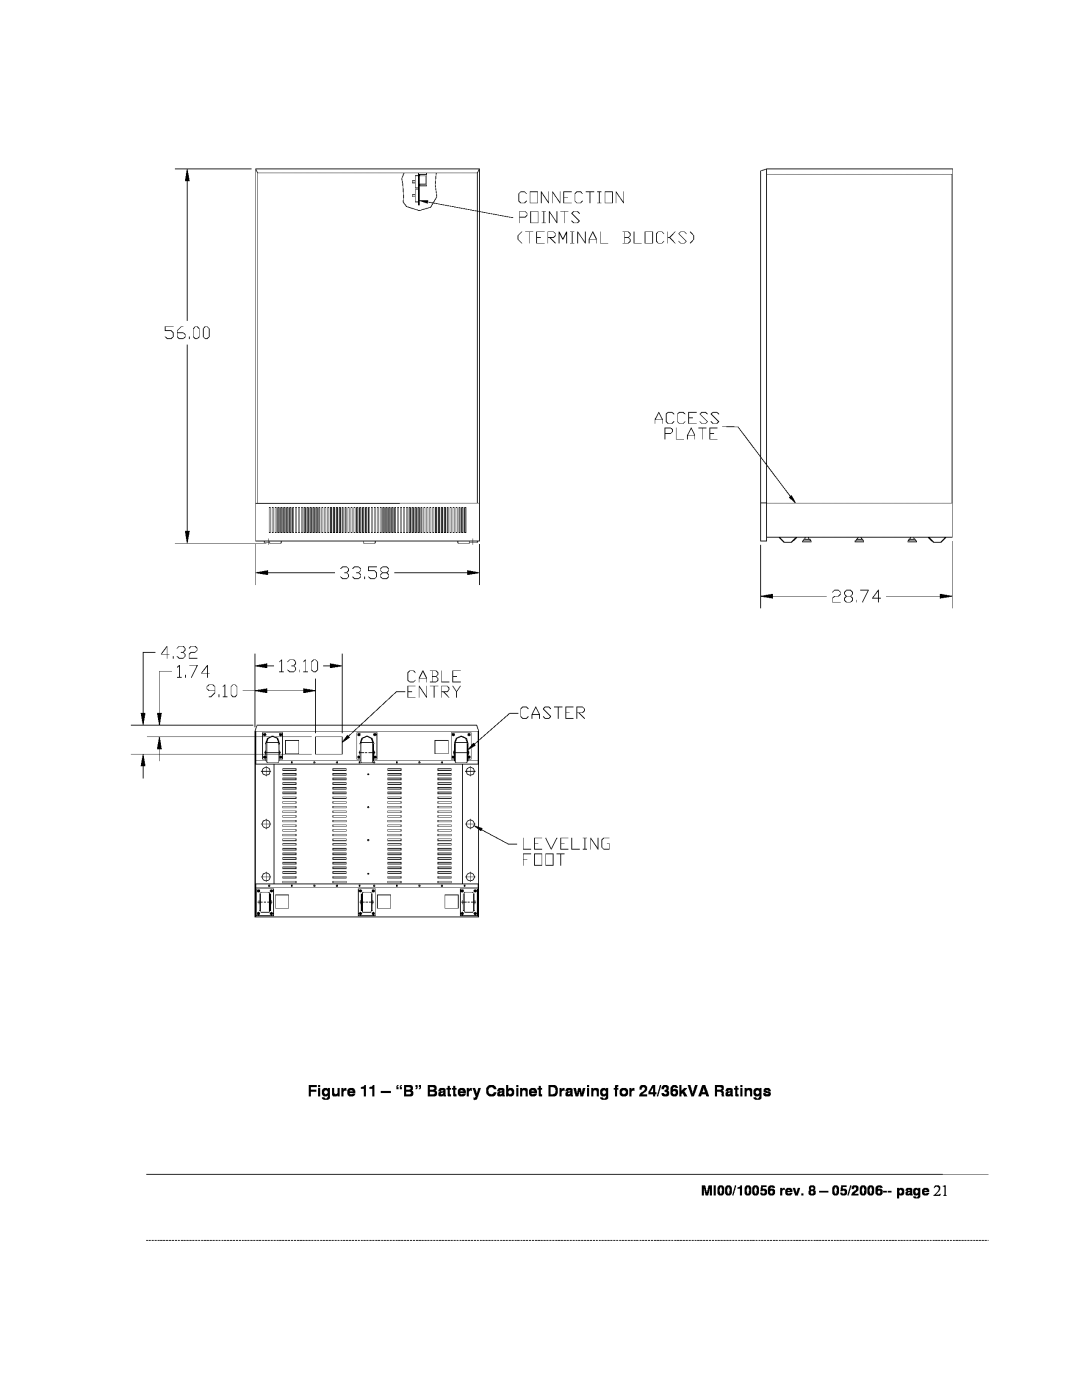 Garmin EDP70 manual “B” Battery Cabinet Drawing for 24/36kVA Ratings, MI00/10056 rev. 8 - 05/2006-- page 